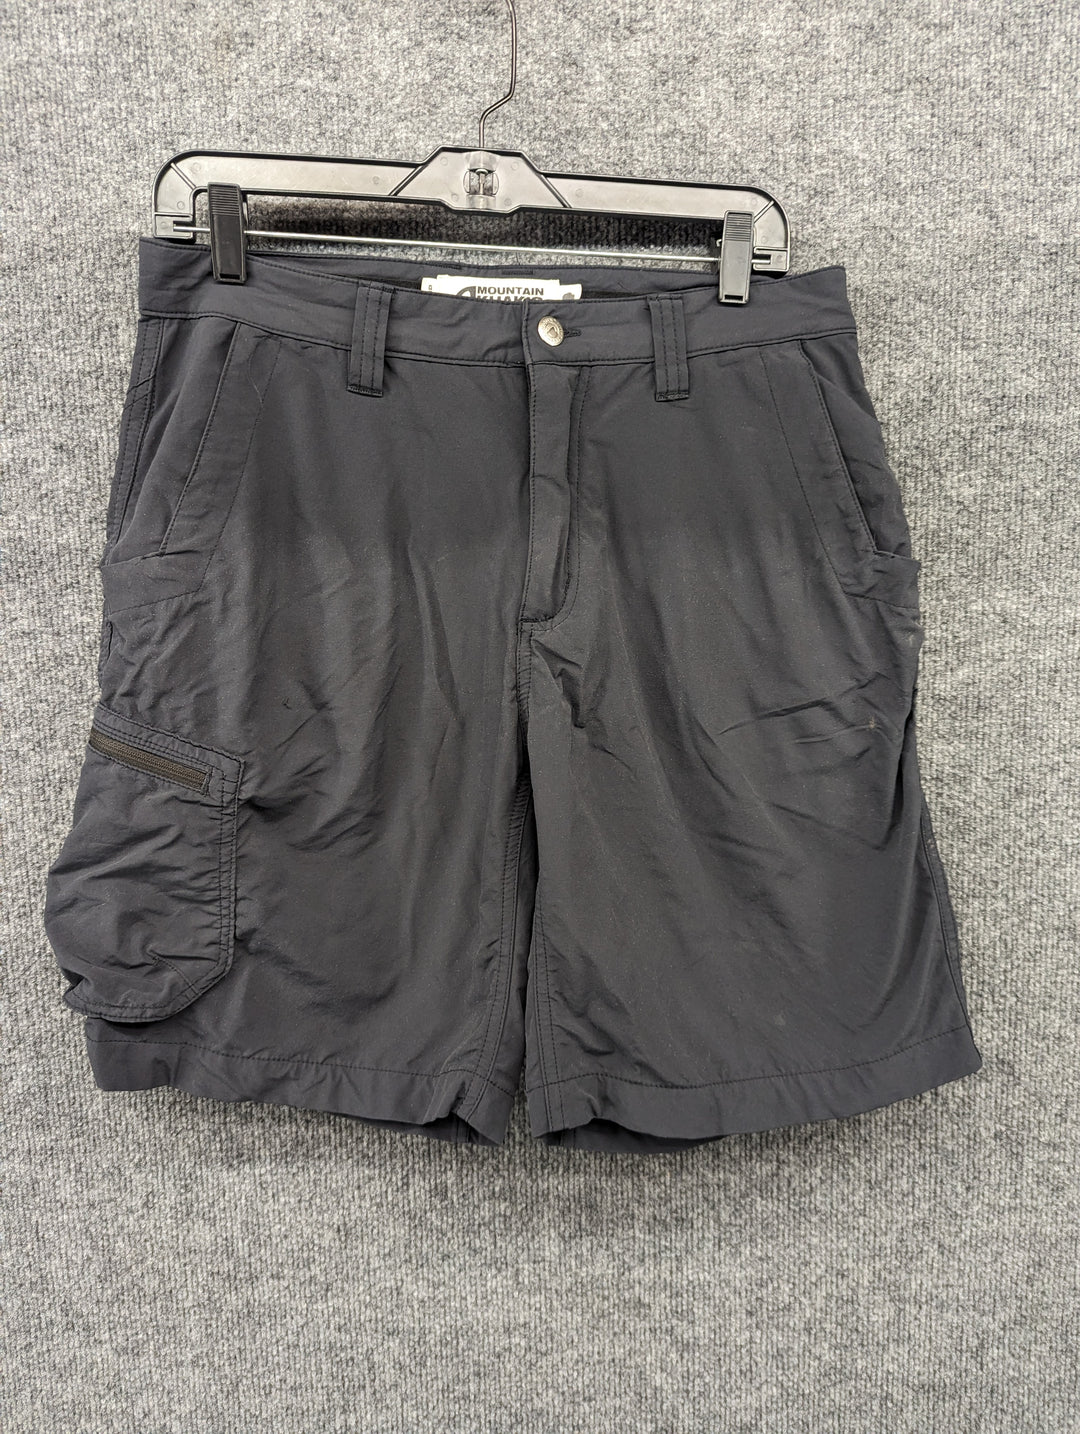 Mountain Khakis Size 32 Men's Casual Shorts